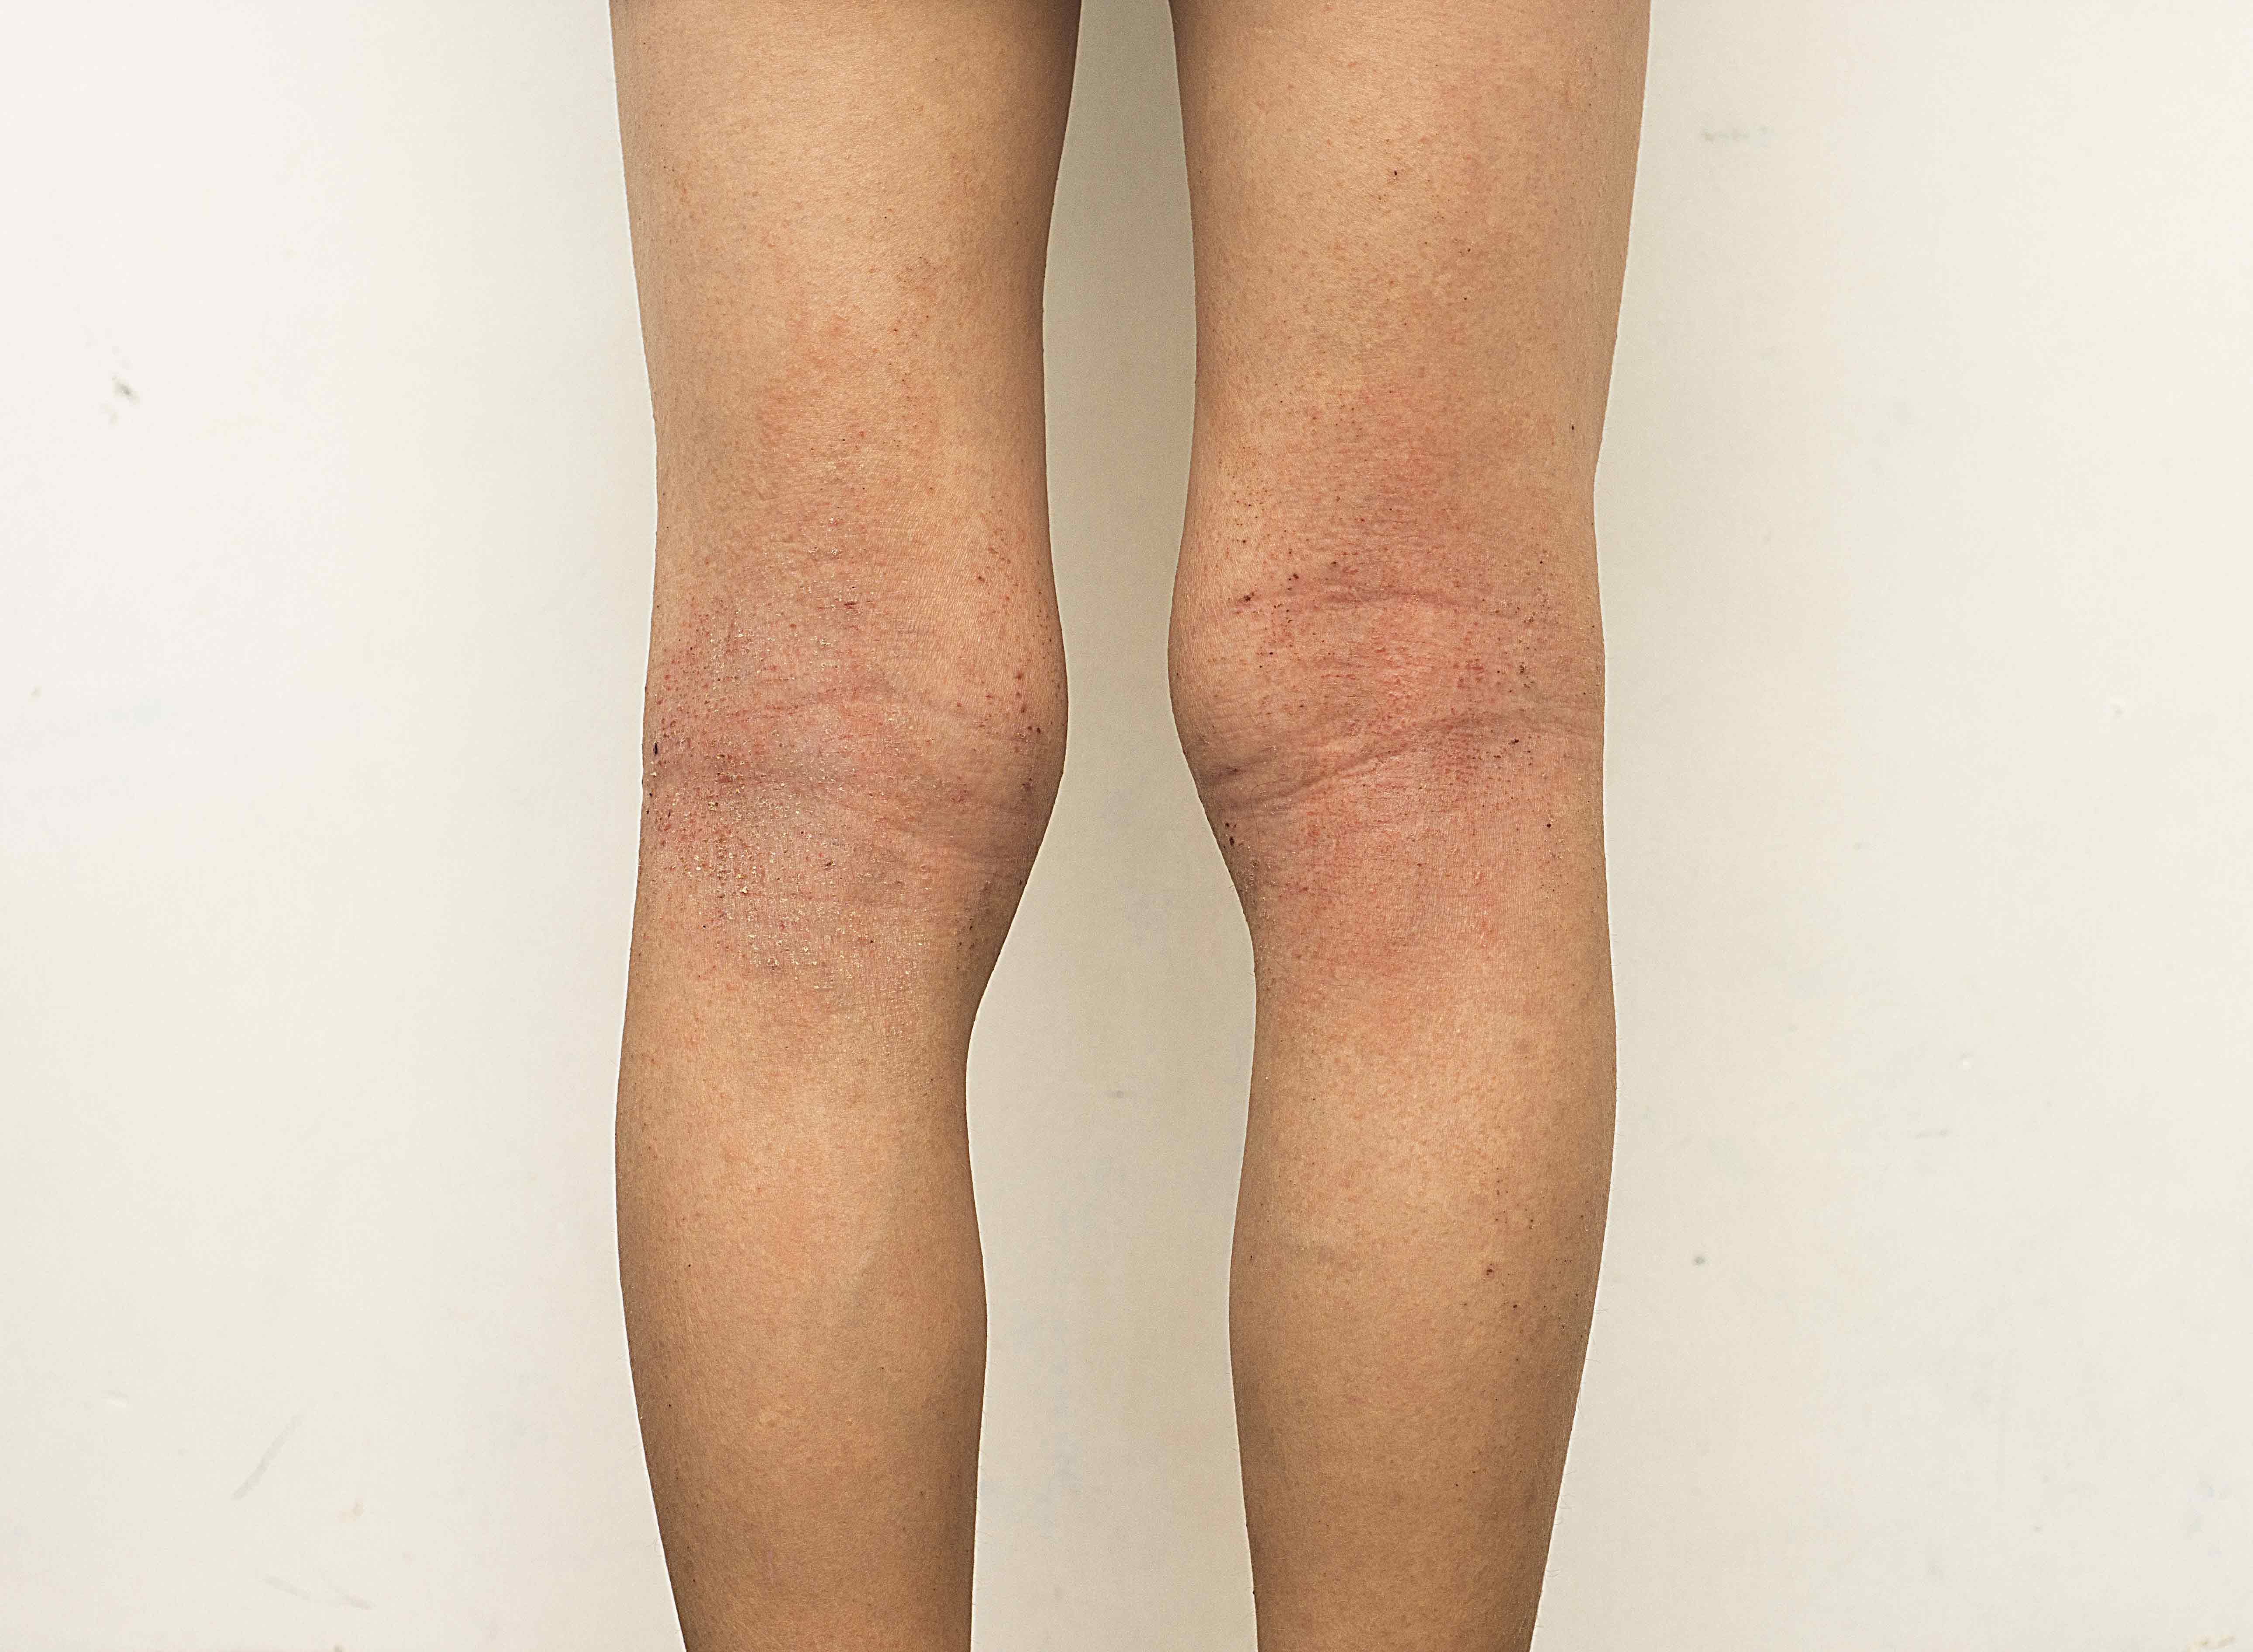 Atopic eczema of the knees